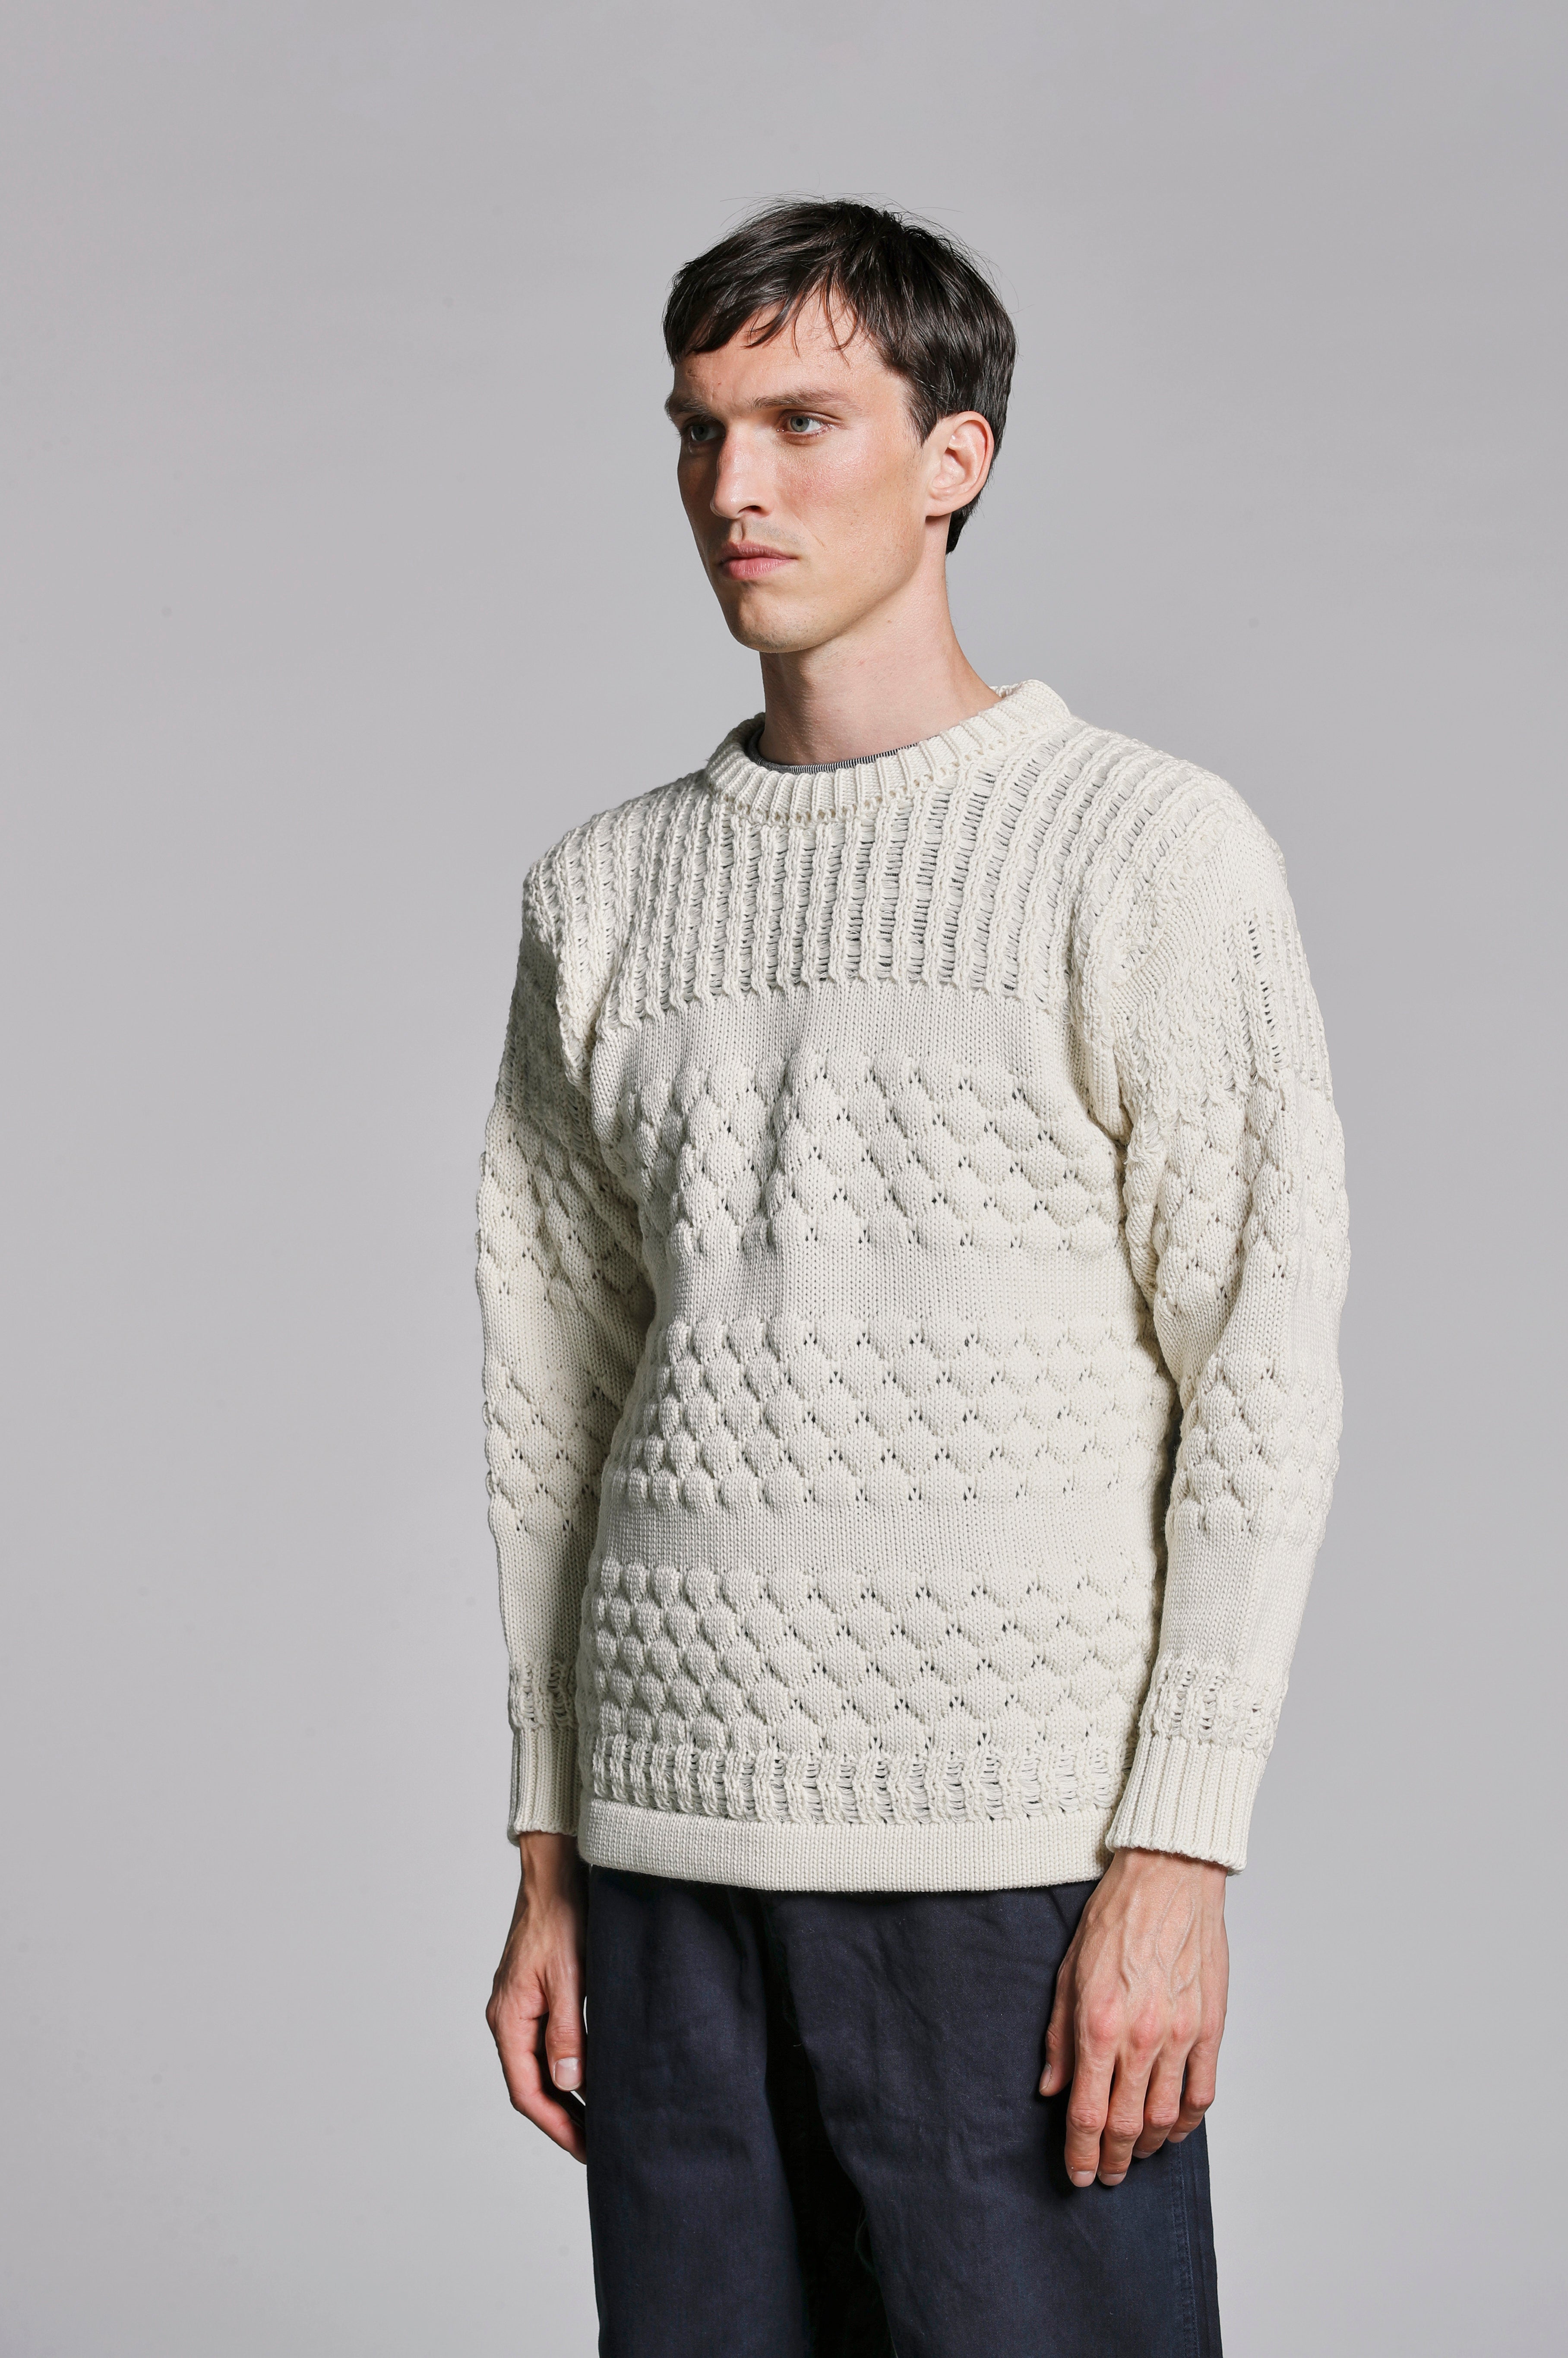 White heavy textured knitted crew neck | MACRO | S. N. S. HERNING – S ...